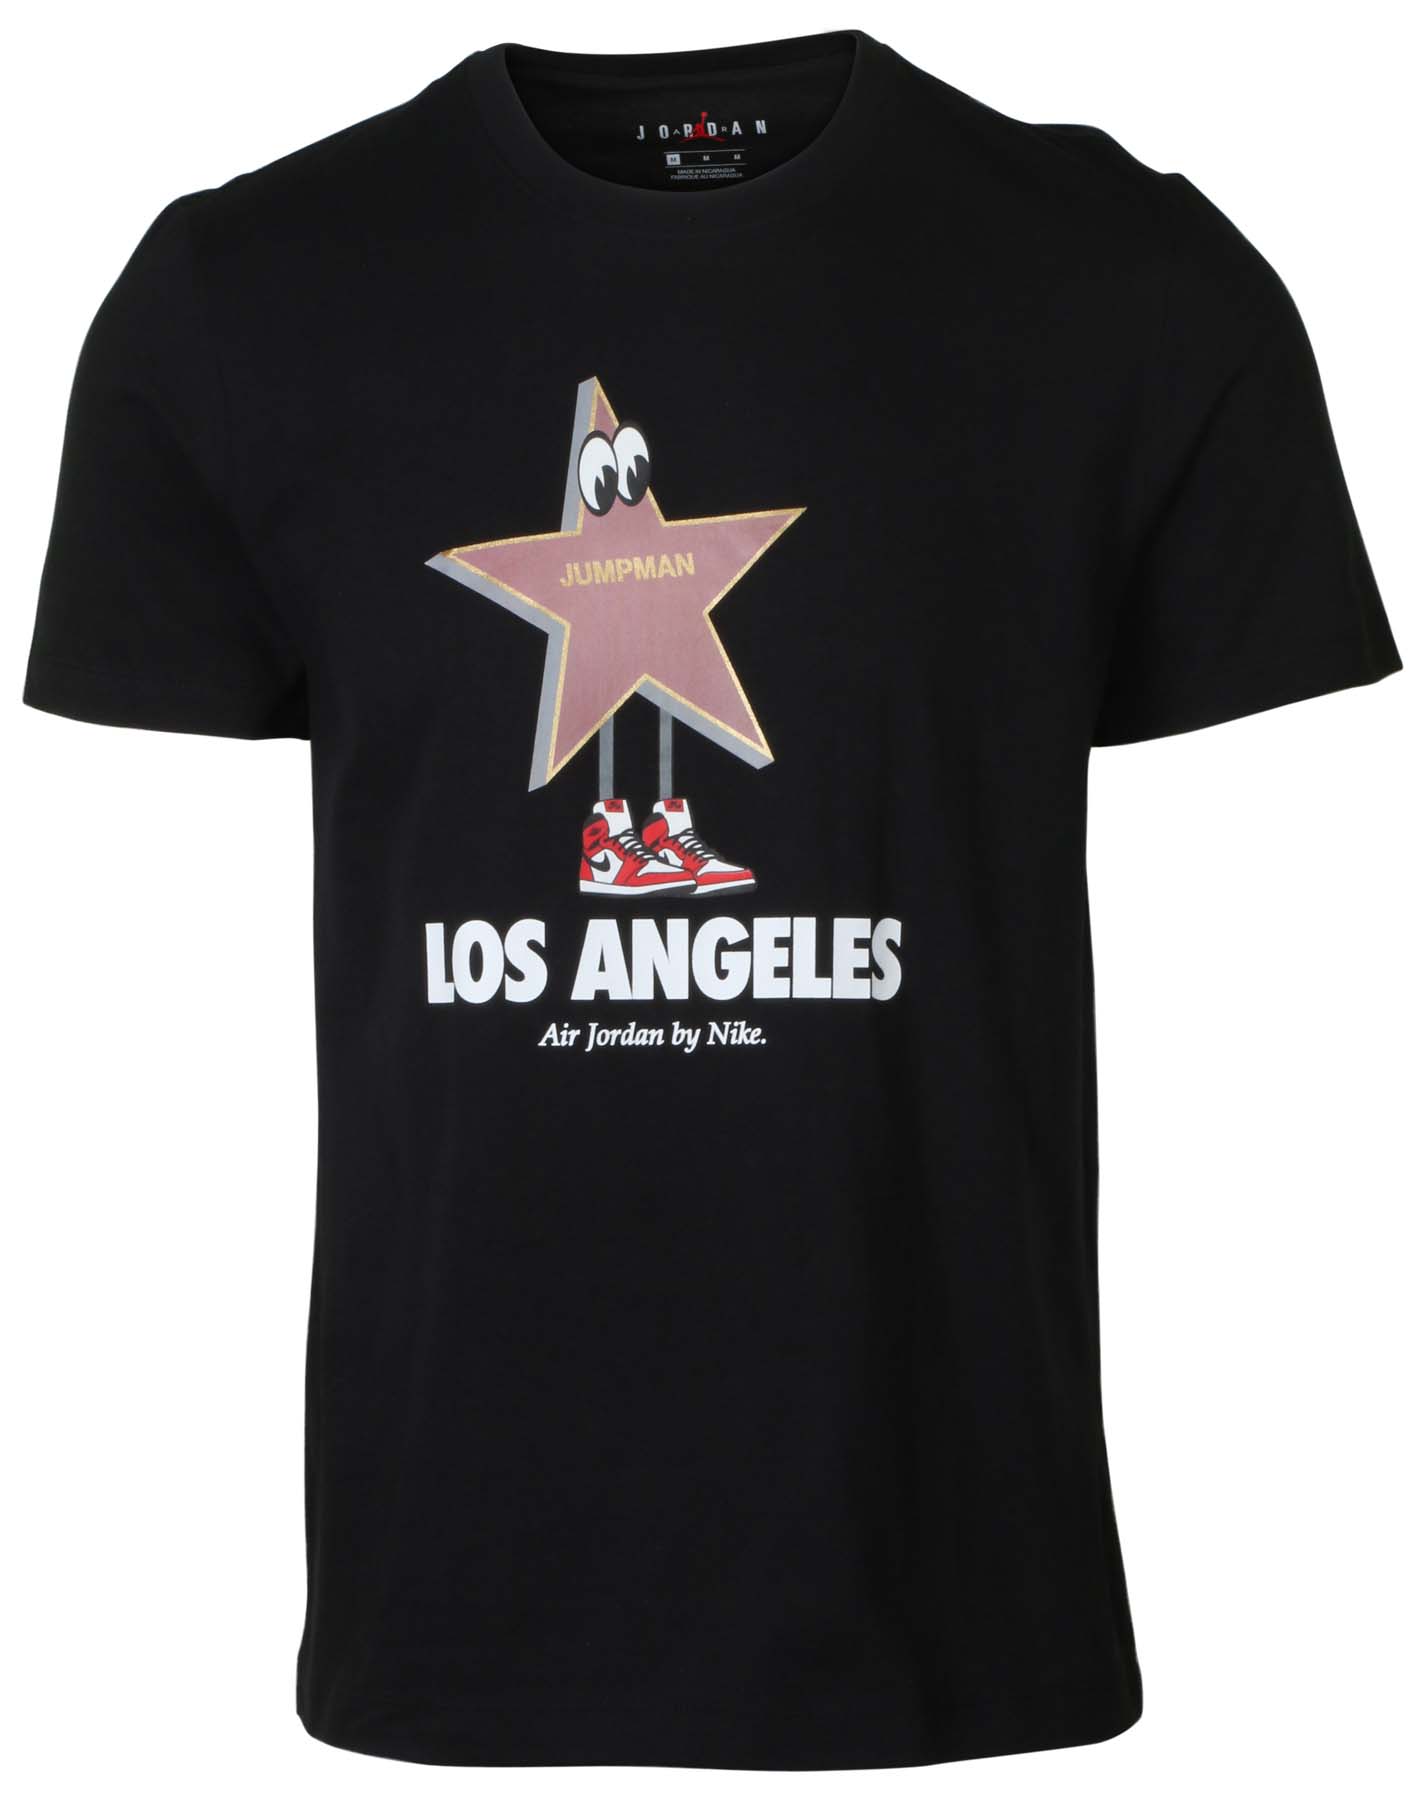 Jordan Men's Nike Los Angeles Star Character Graphic Tee (Black, Medium) - image 1 of 3